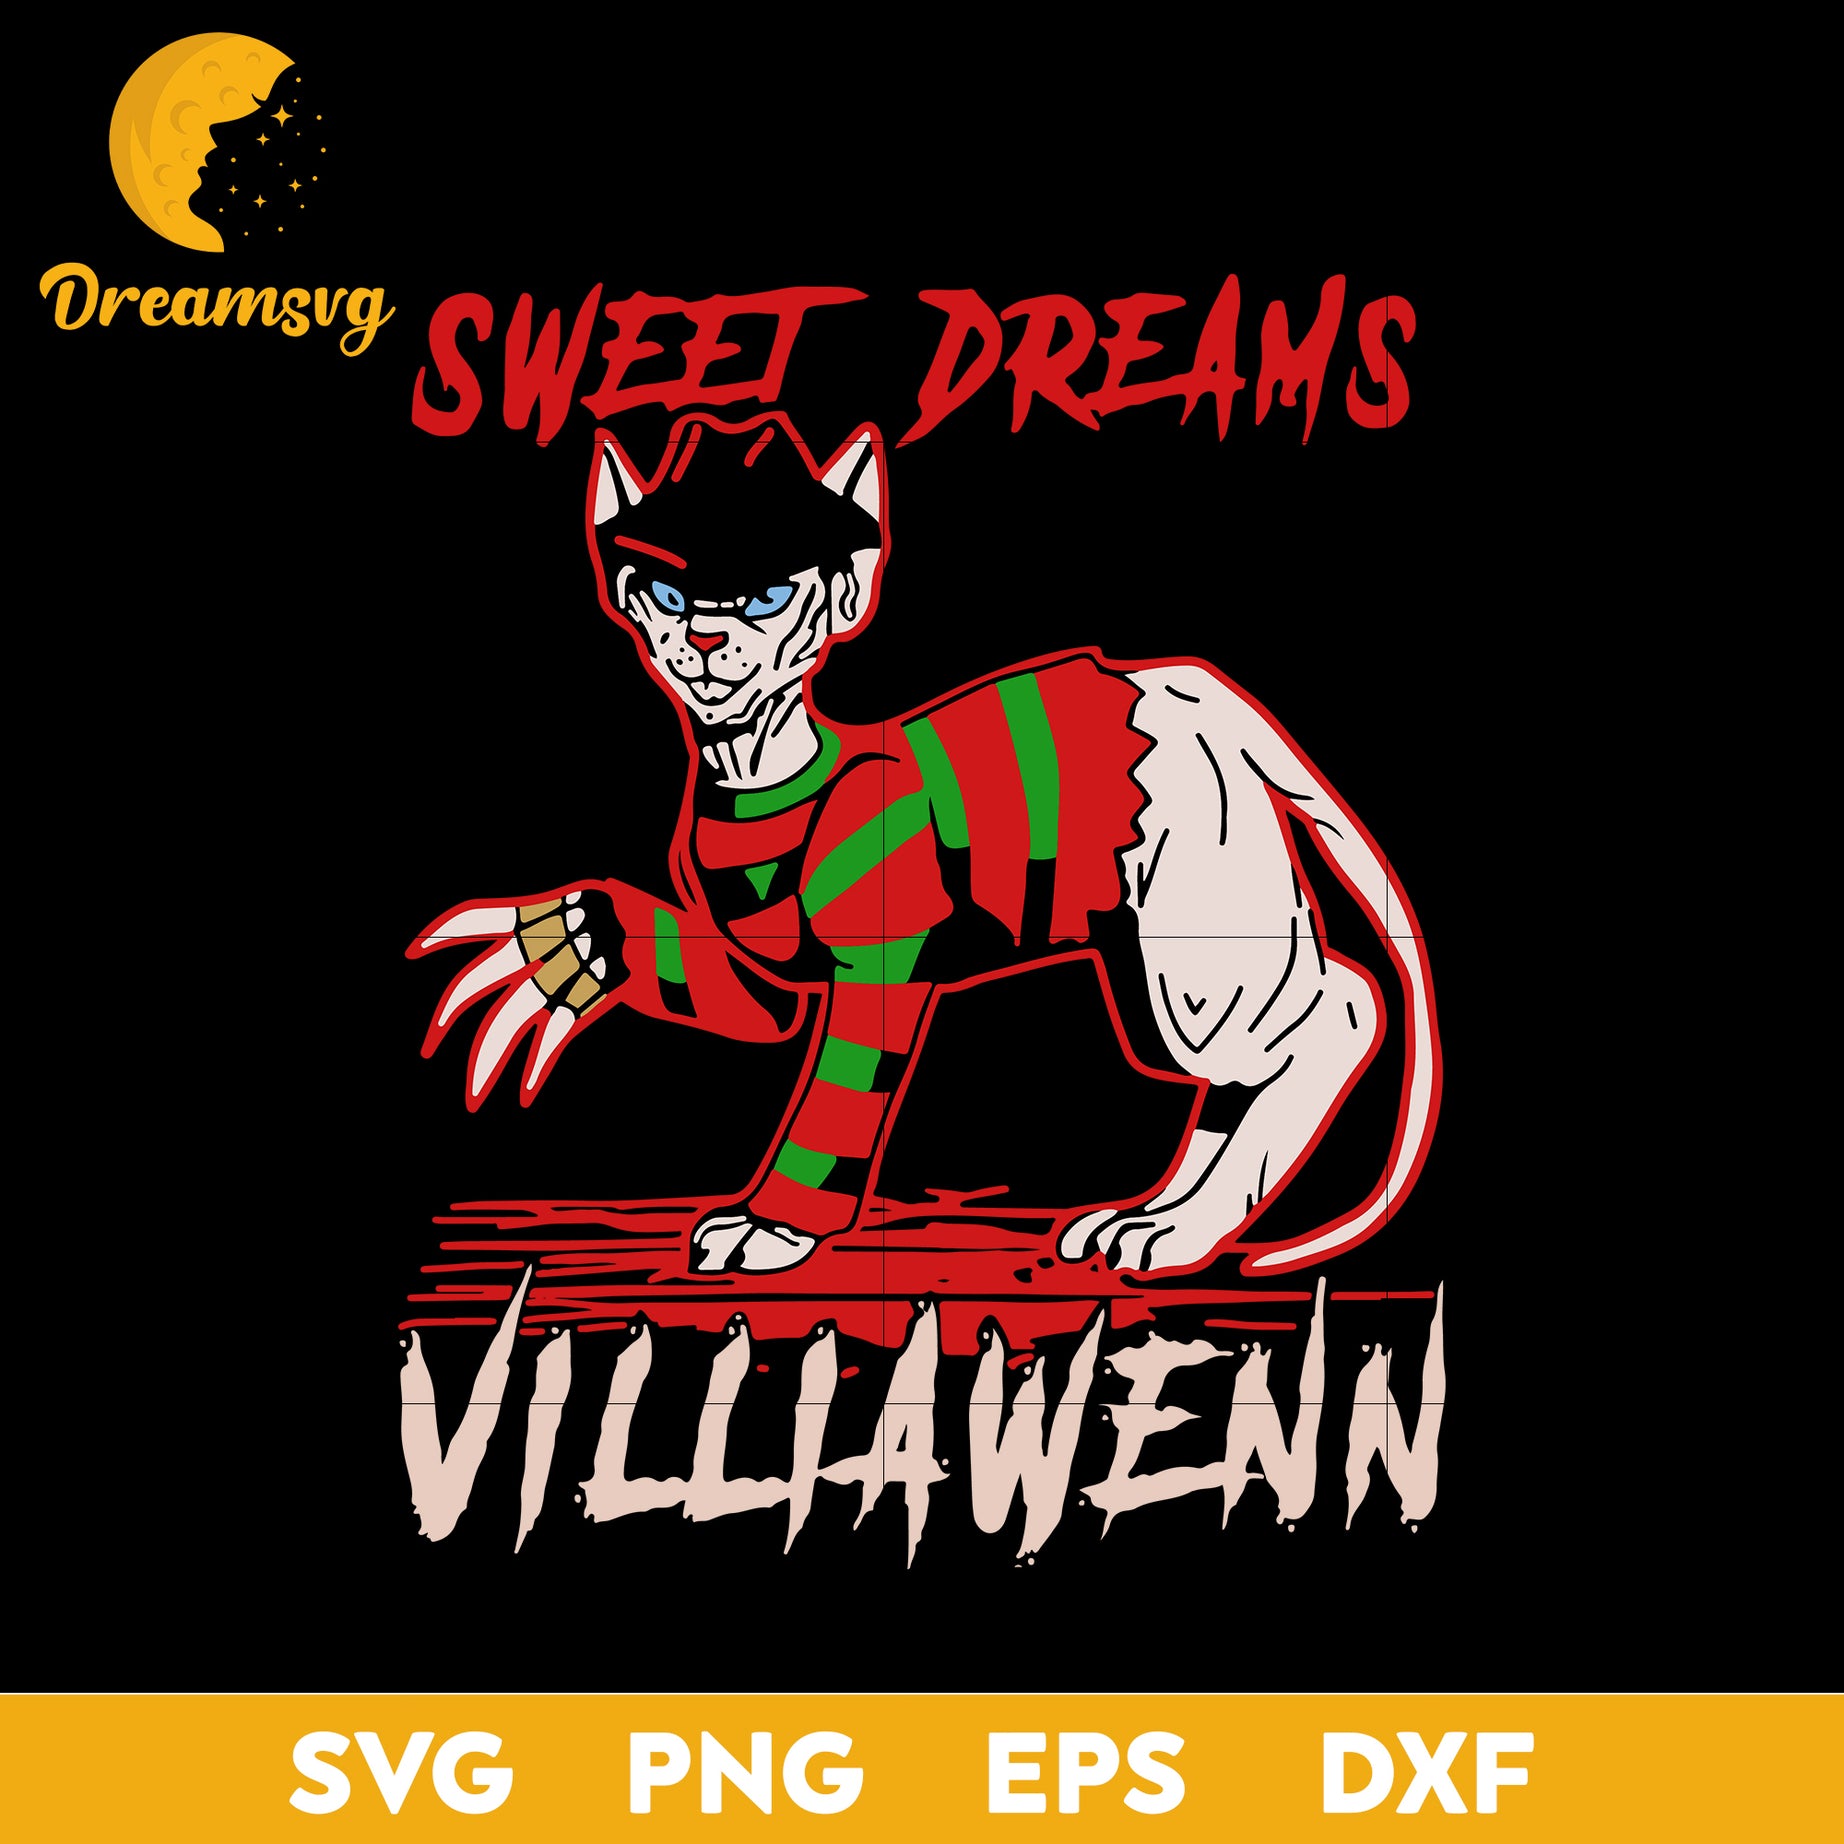 Freddy krueger cat sweet dreams villianwenn halloween svg, Halloween svg, png, dxf, eps digital file.